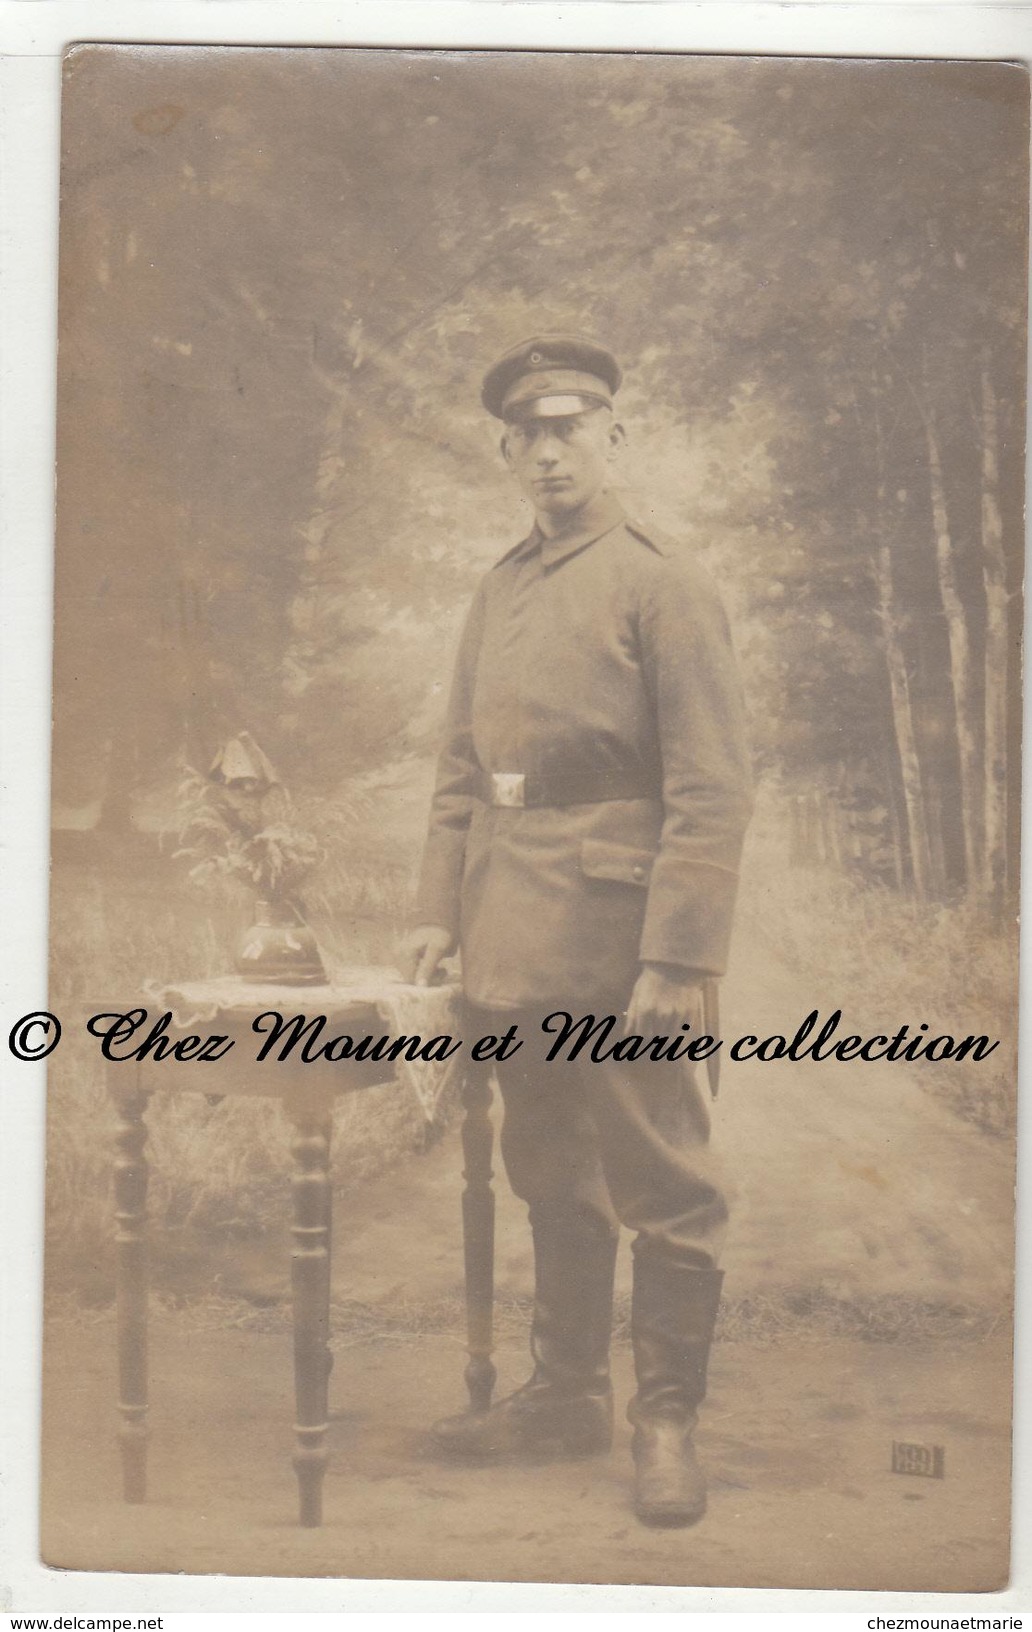 ALLEMAGNE WWI 1917 - MUNSTER LAGER - POUR MOLDER - ALLEMAND - CARTE PHOTO MILITAIRE - Guerra 1914-18